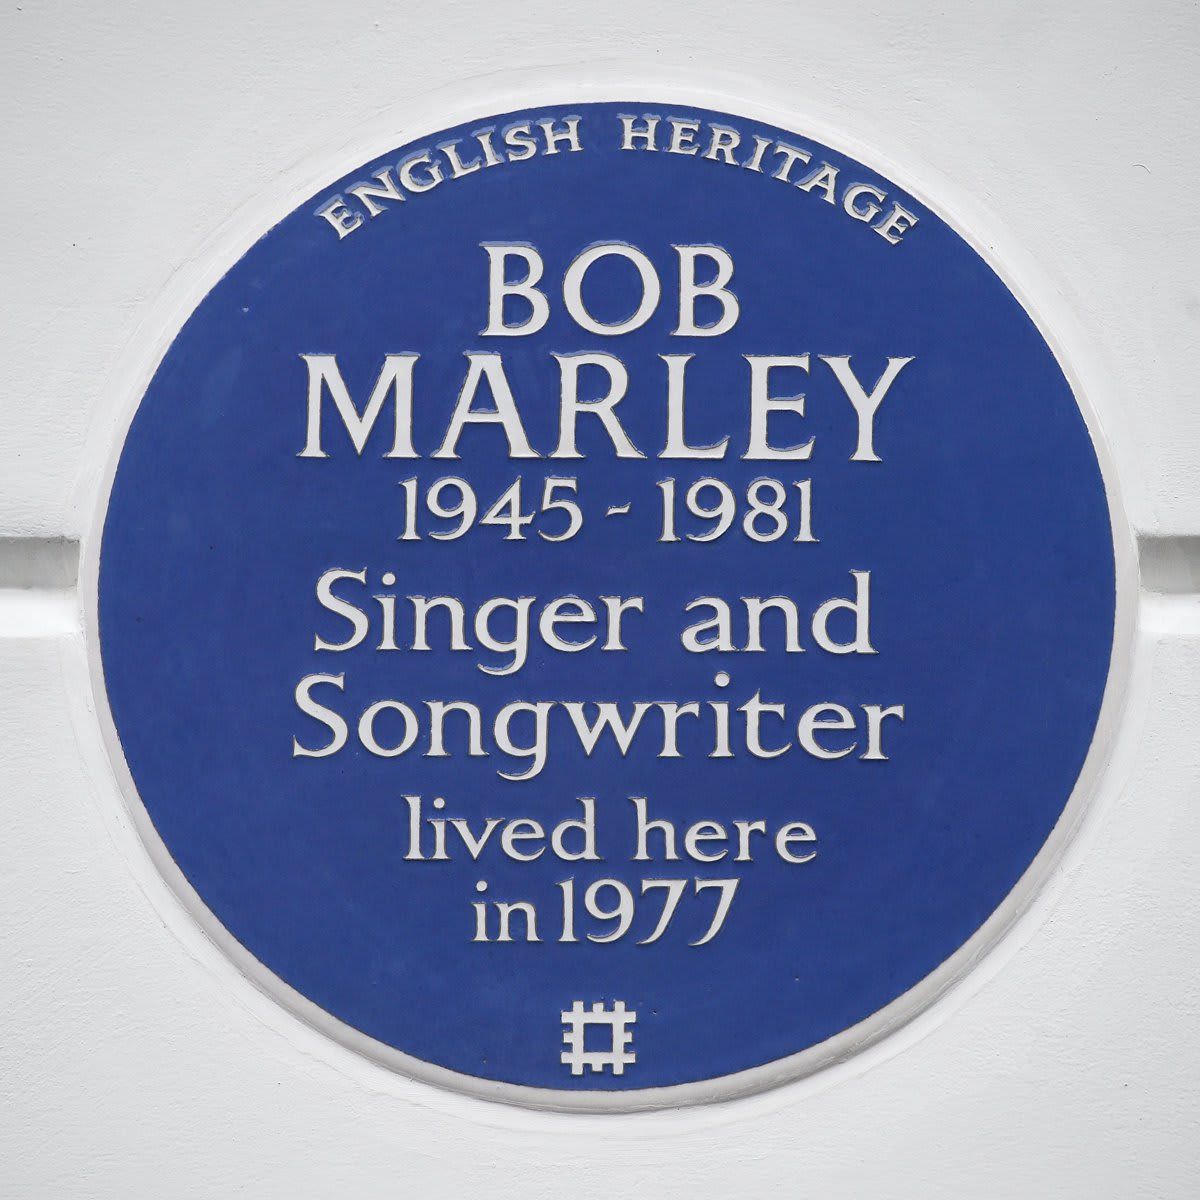 Bob Marley English Heritage blue plague unveiling